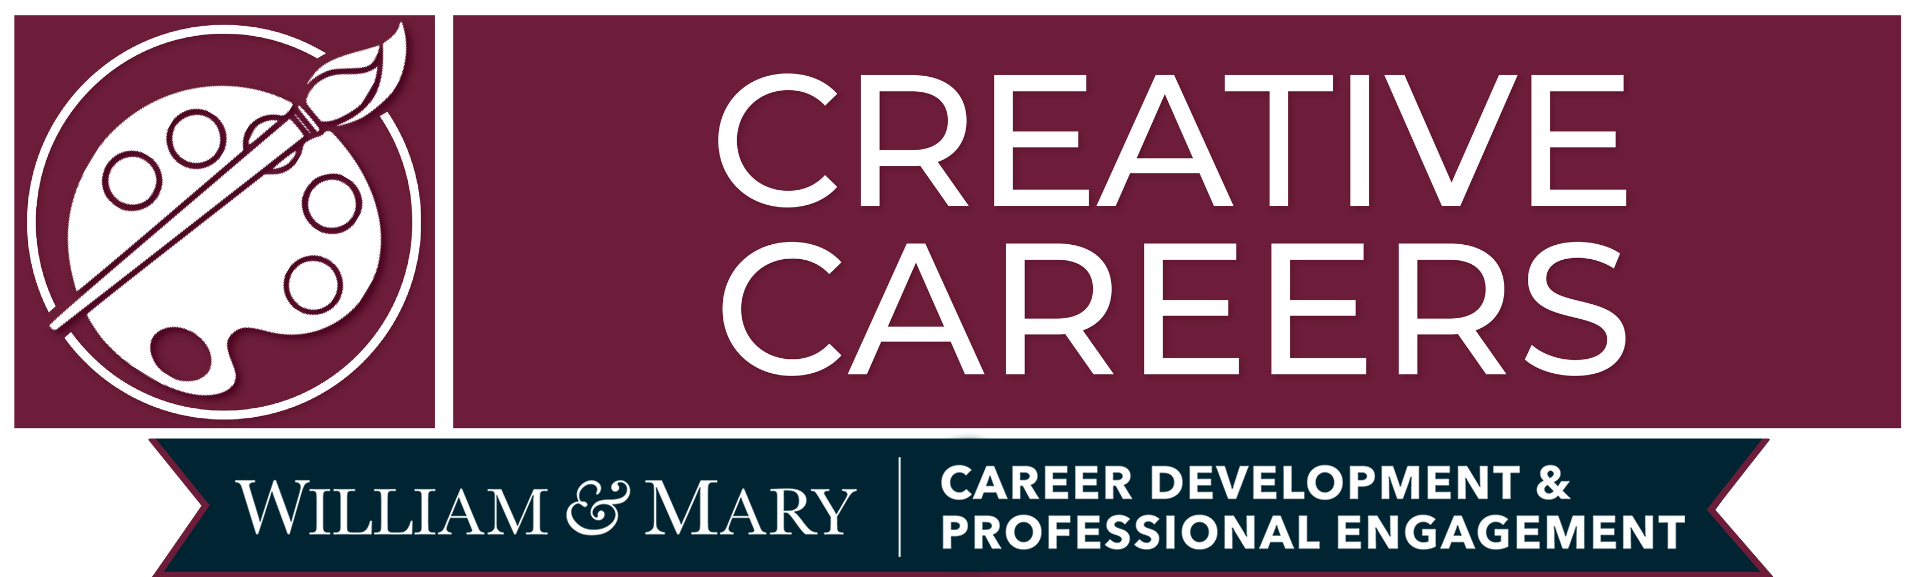 creative-careers-header.png